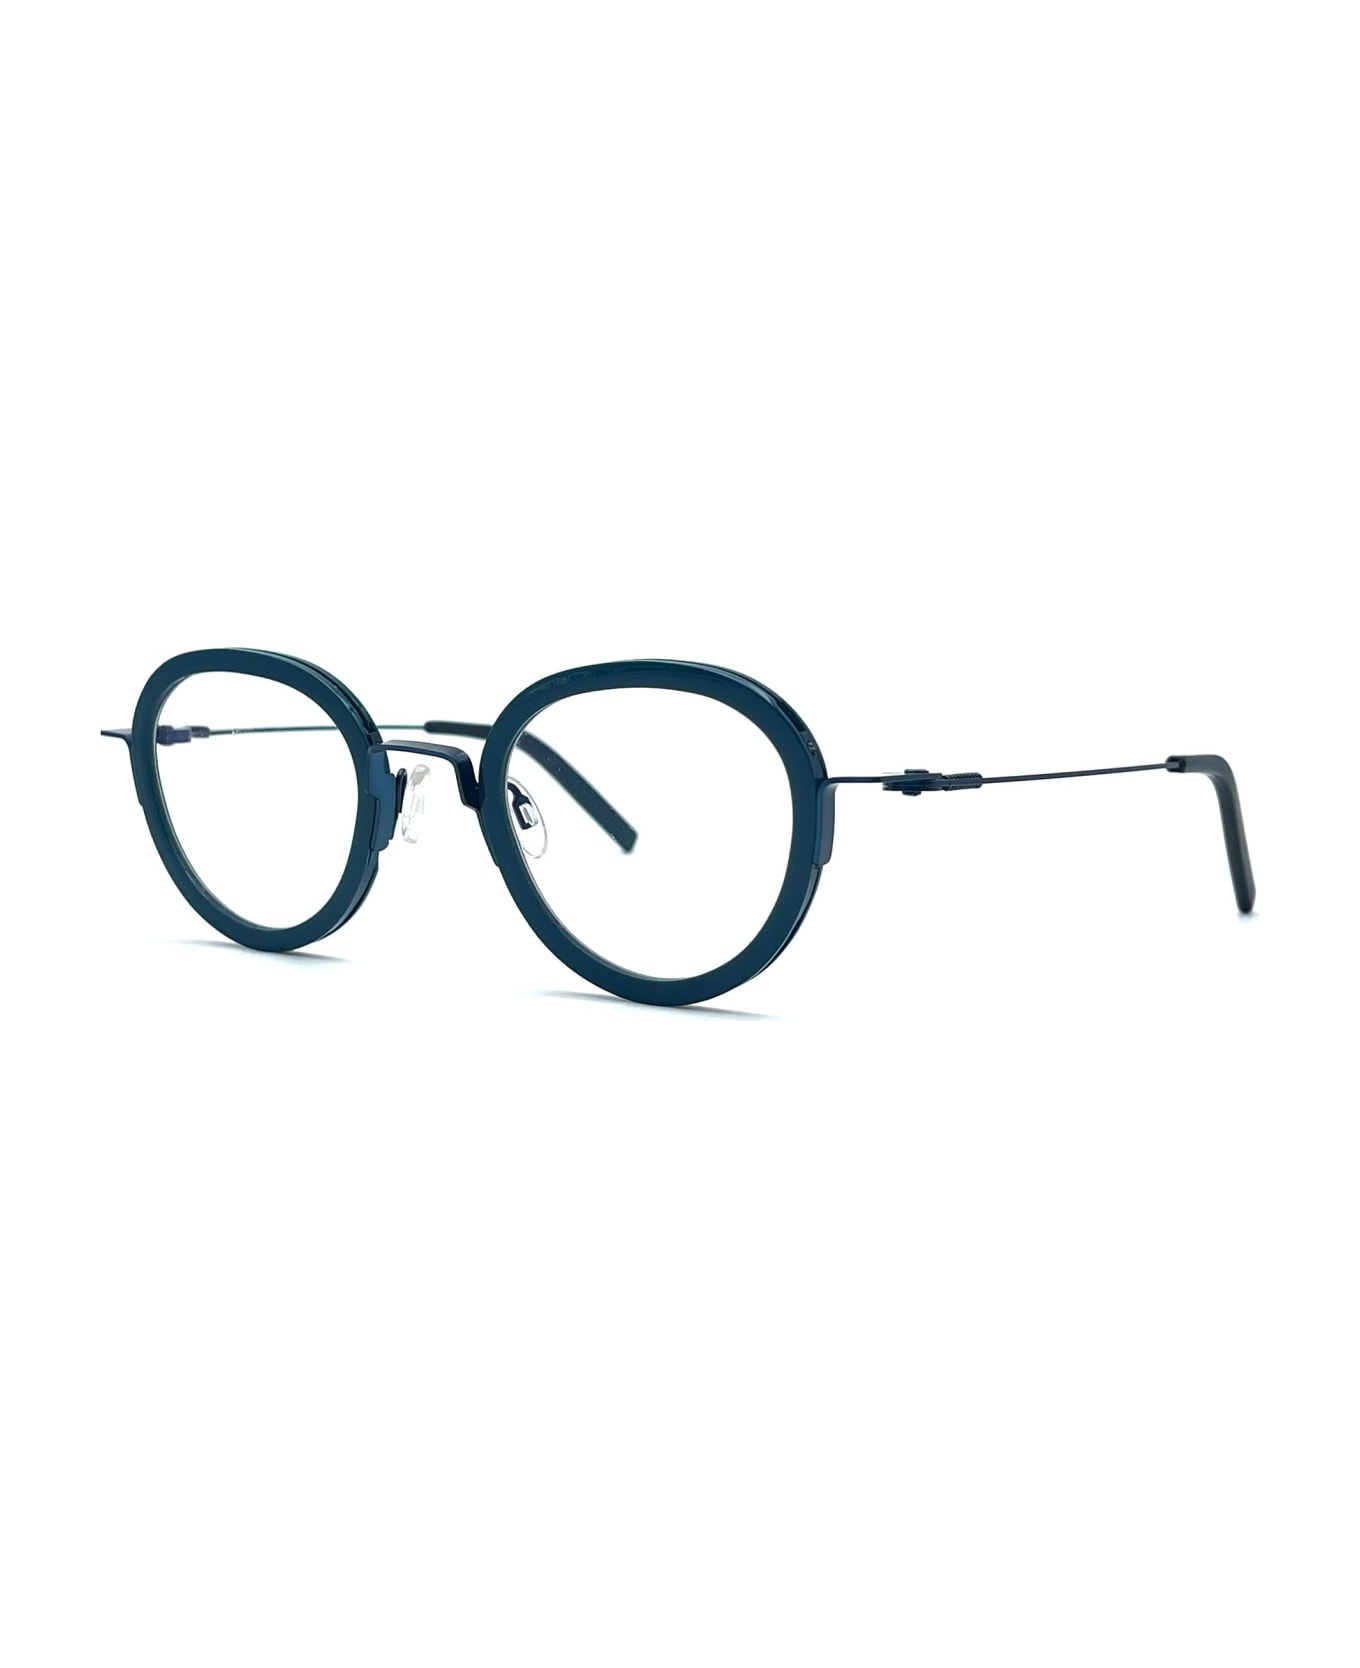 Theo Eyewear Stamppot - 44 Glasses - blue